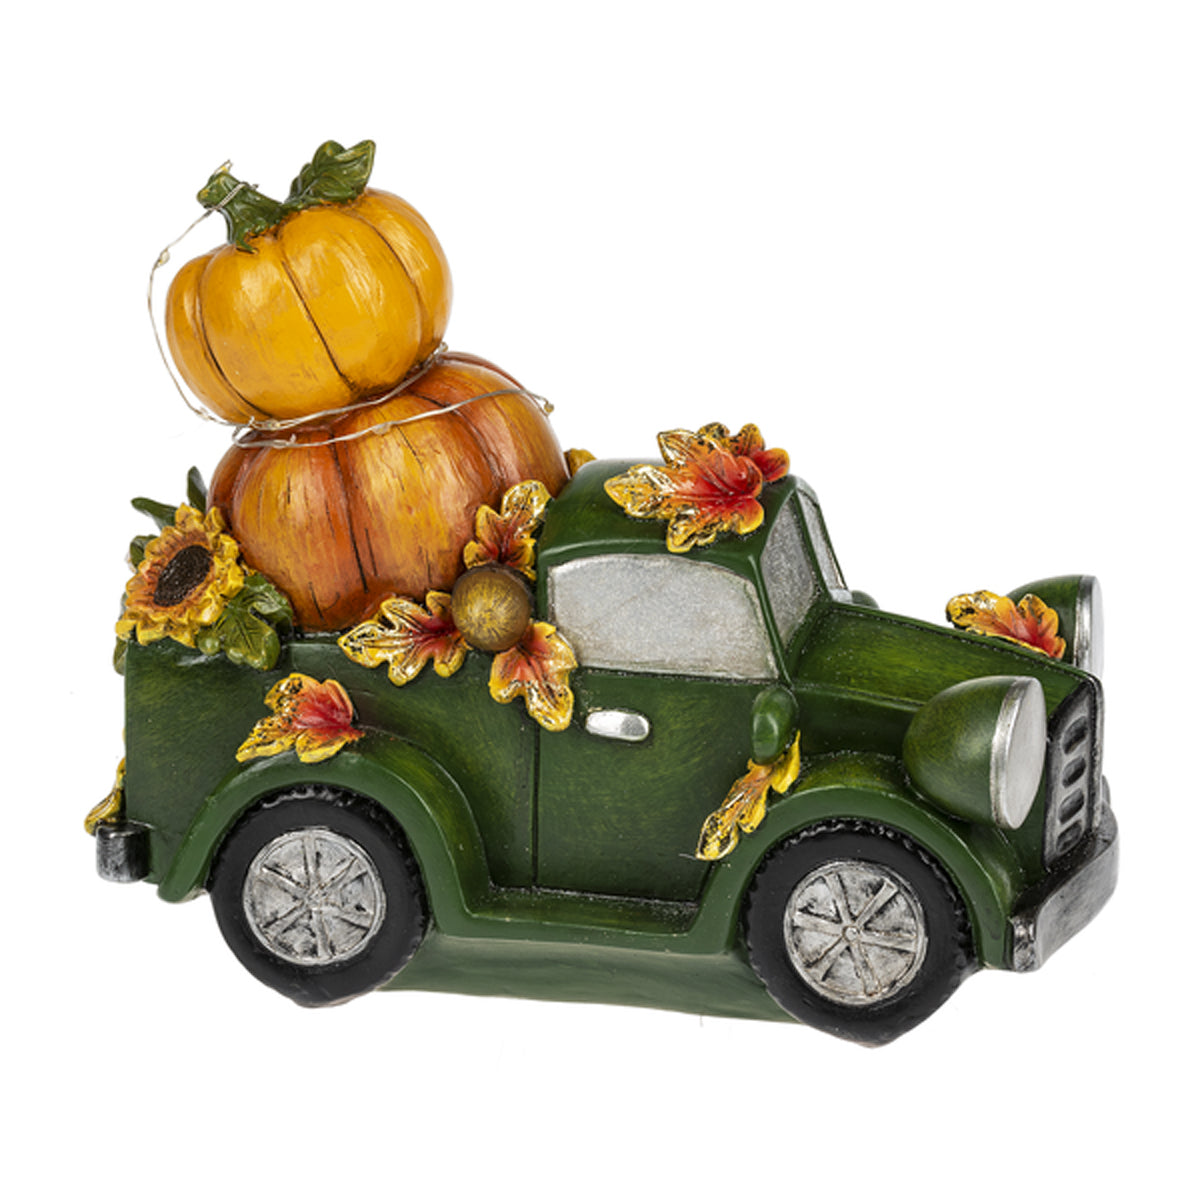 Harvest Truck with Pumpkins Figurine, Light Up